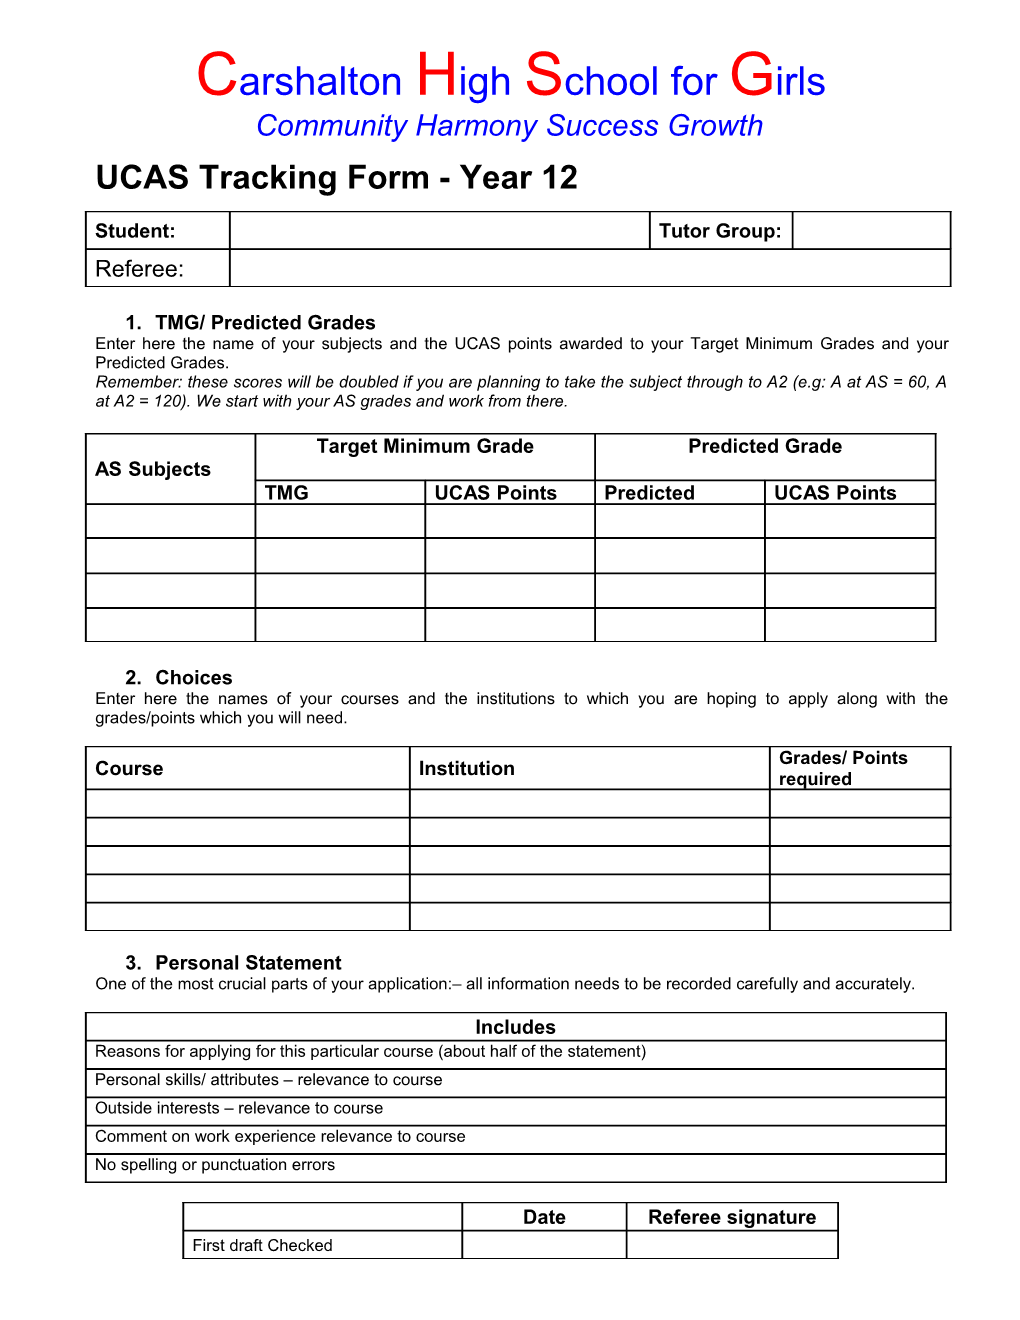 UCAS Tracking Form